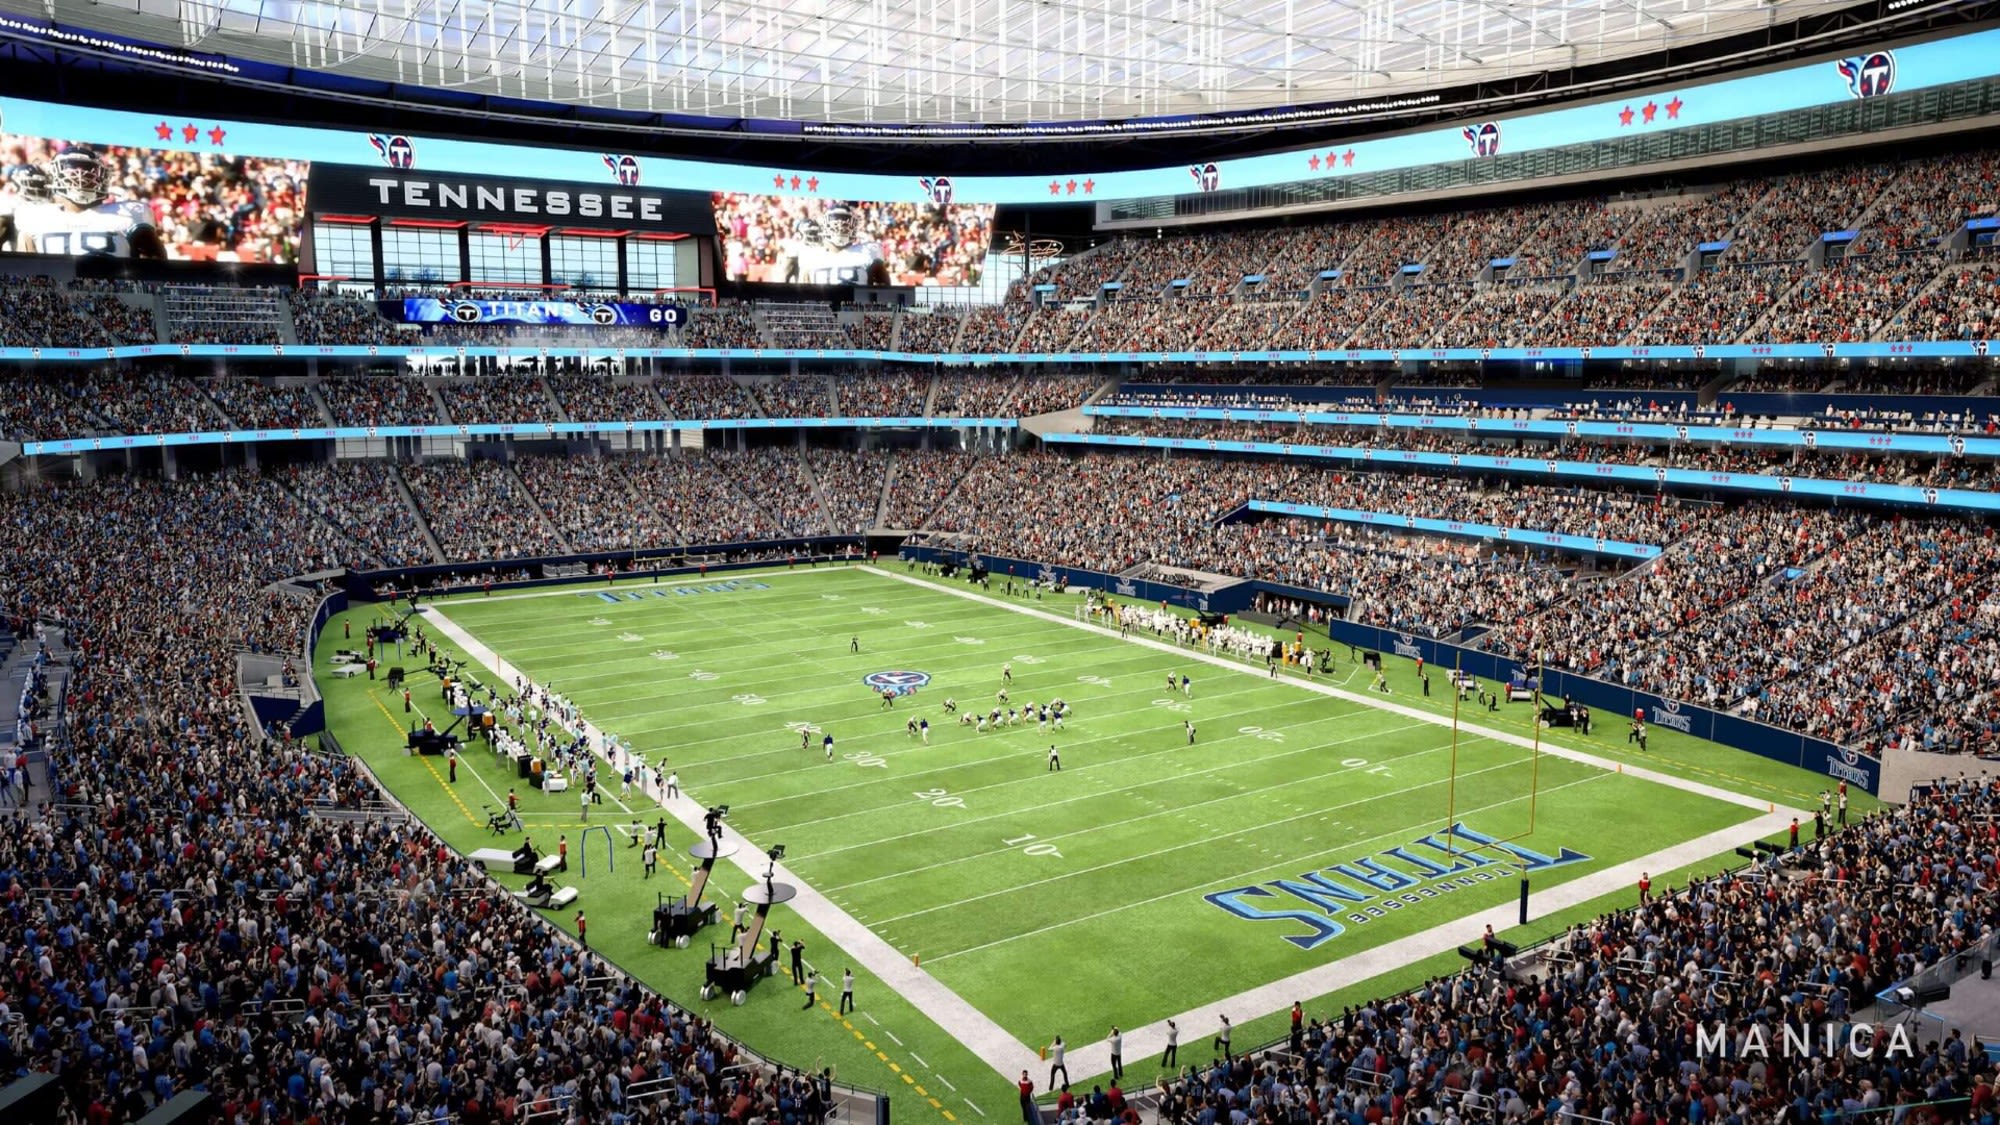 The economics of taxpayer-subsidized stadiums